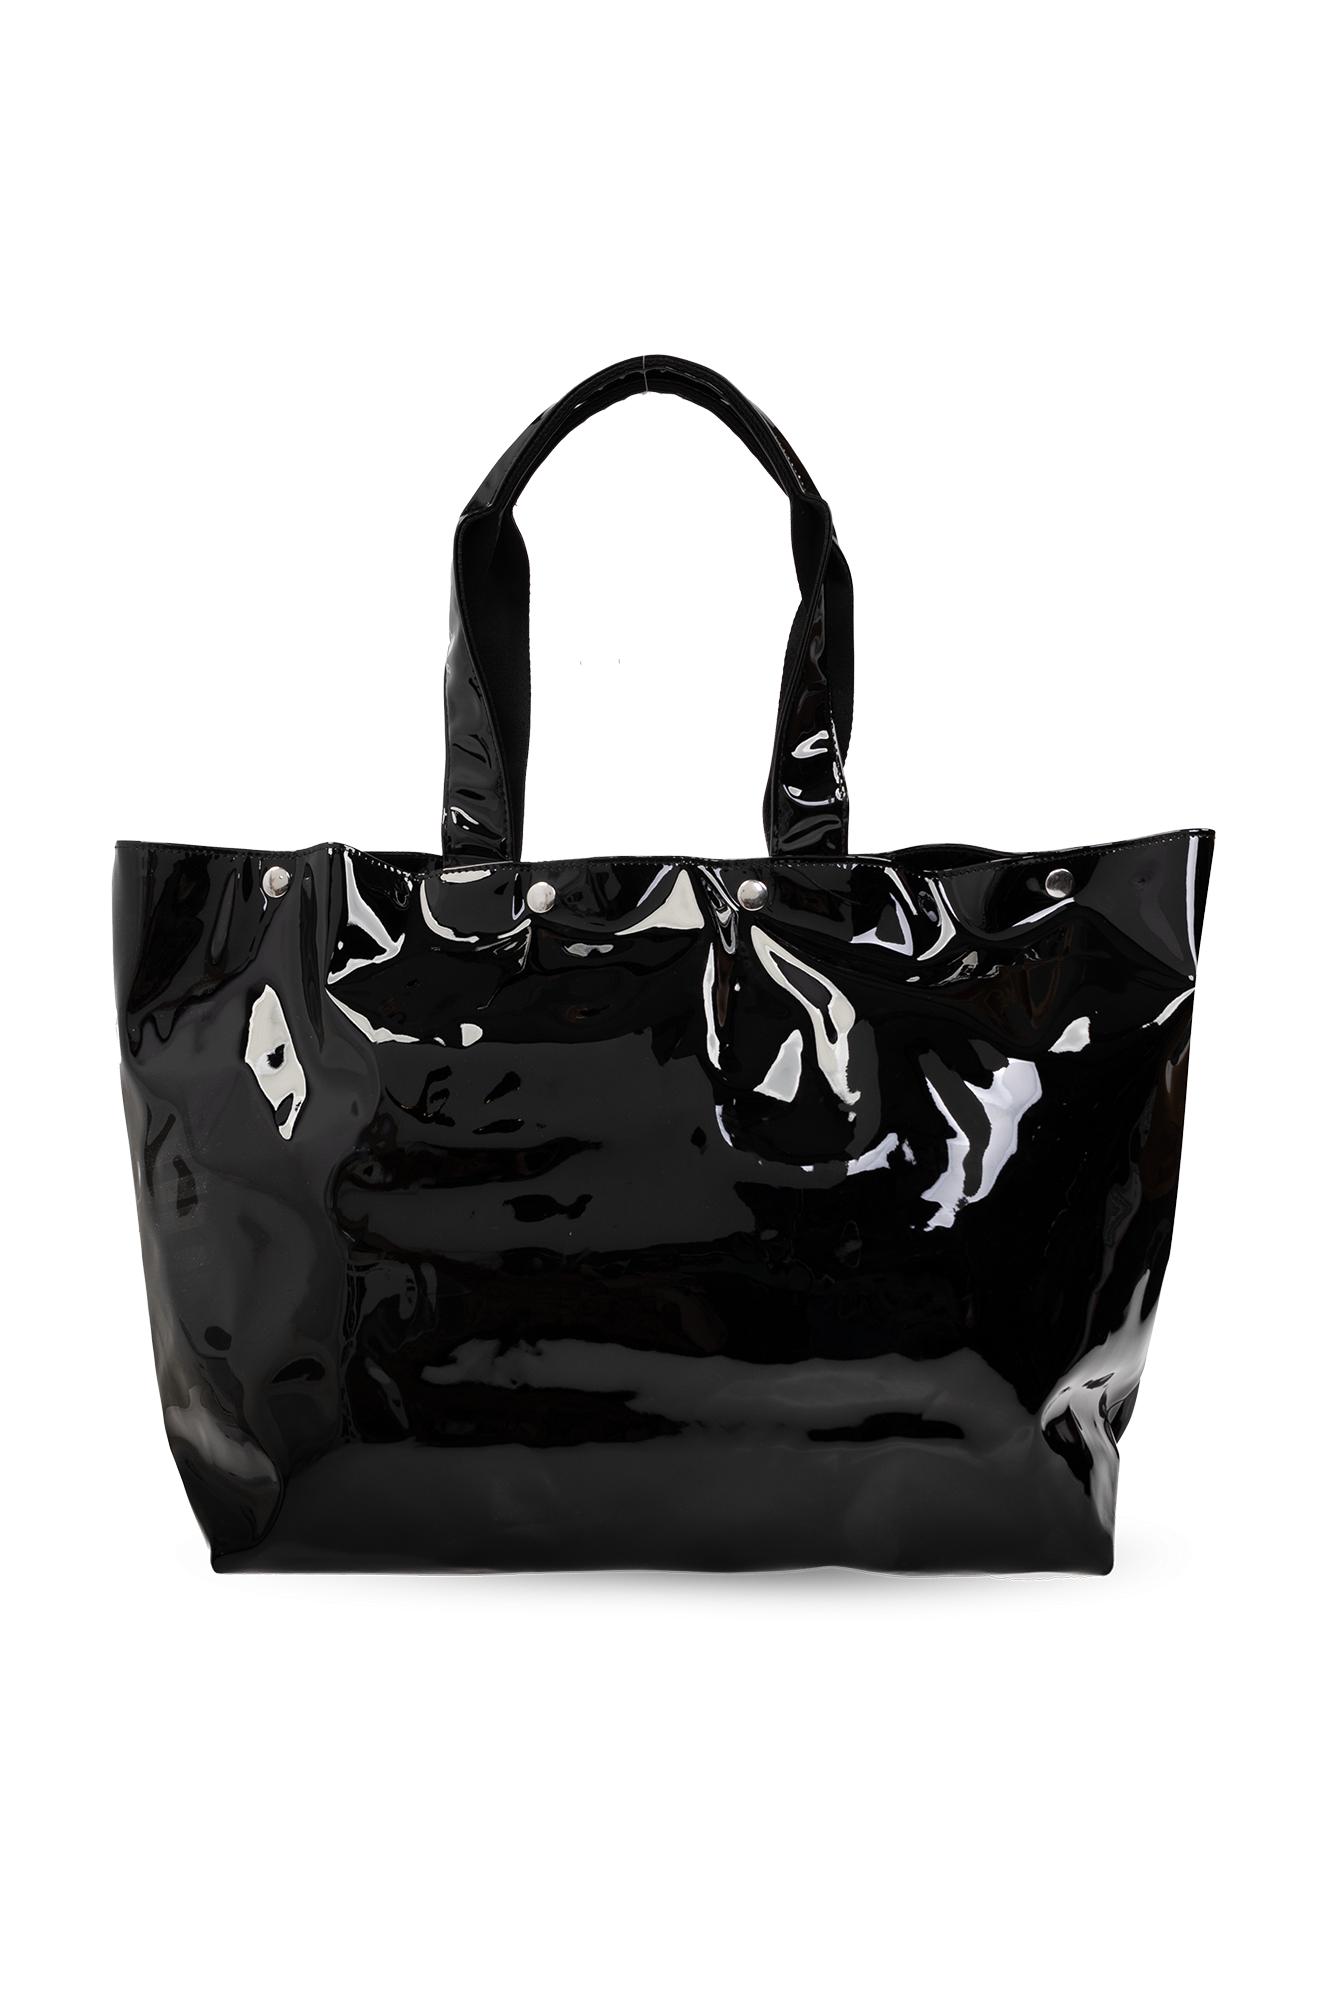 adidas Originals 'always' Shopper Bag in Black | Lyst